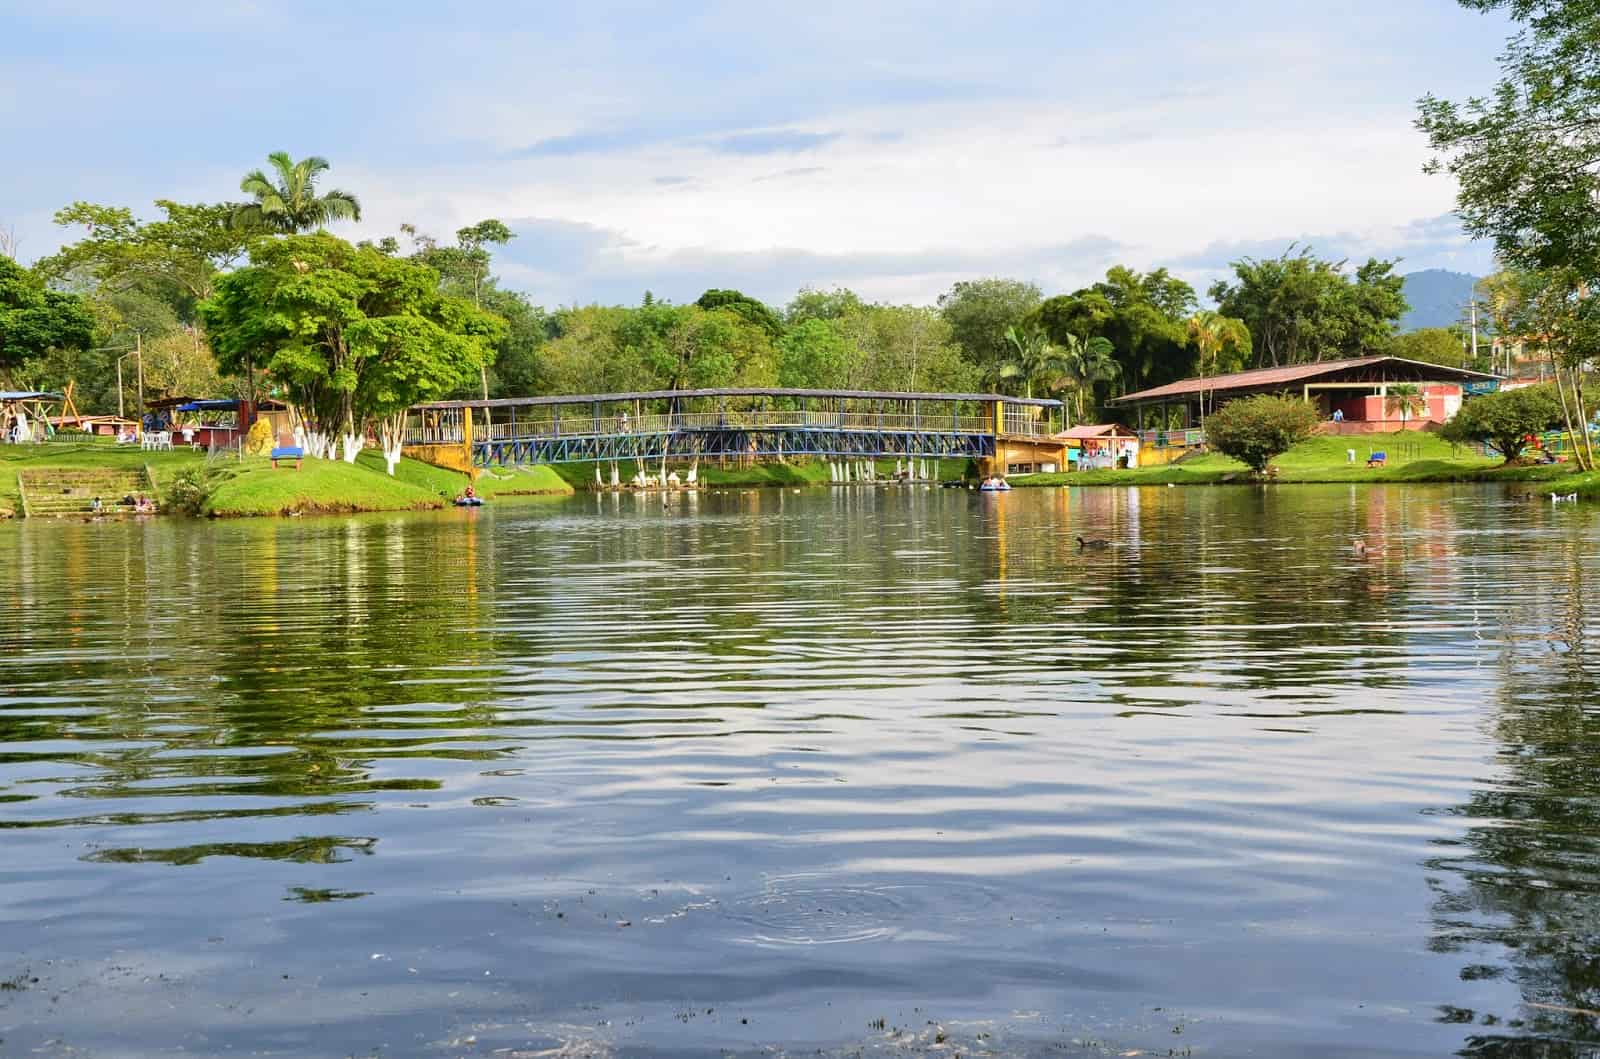 Parque Lago de la Pradera in Dosquebradas, Risaralda, Colombia